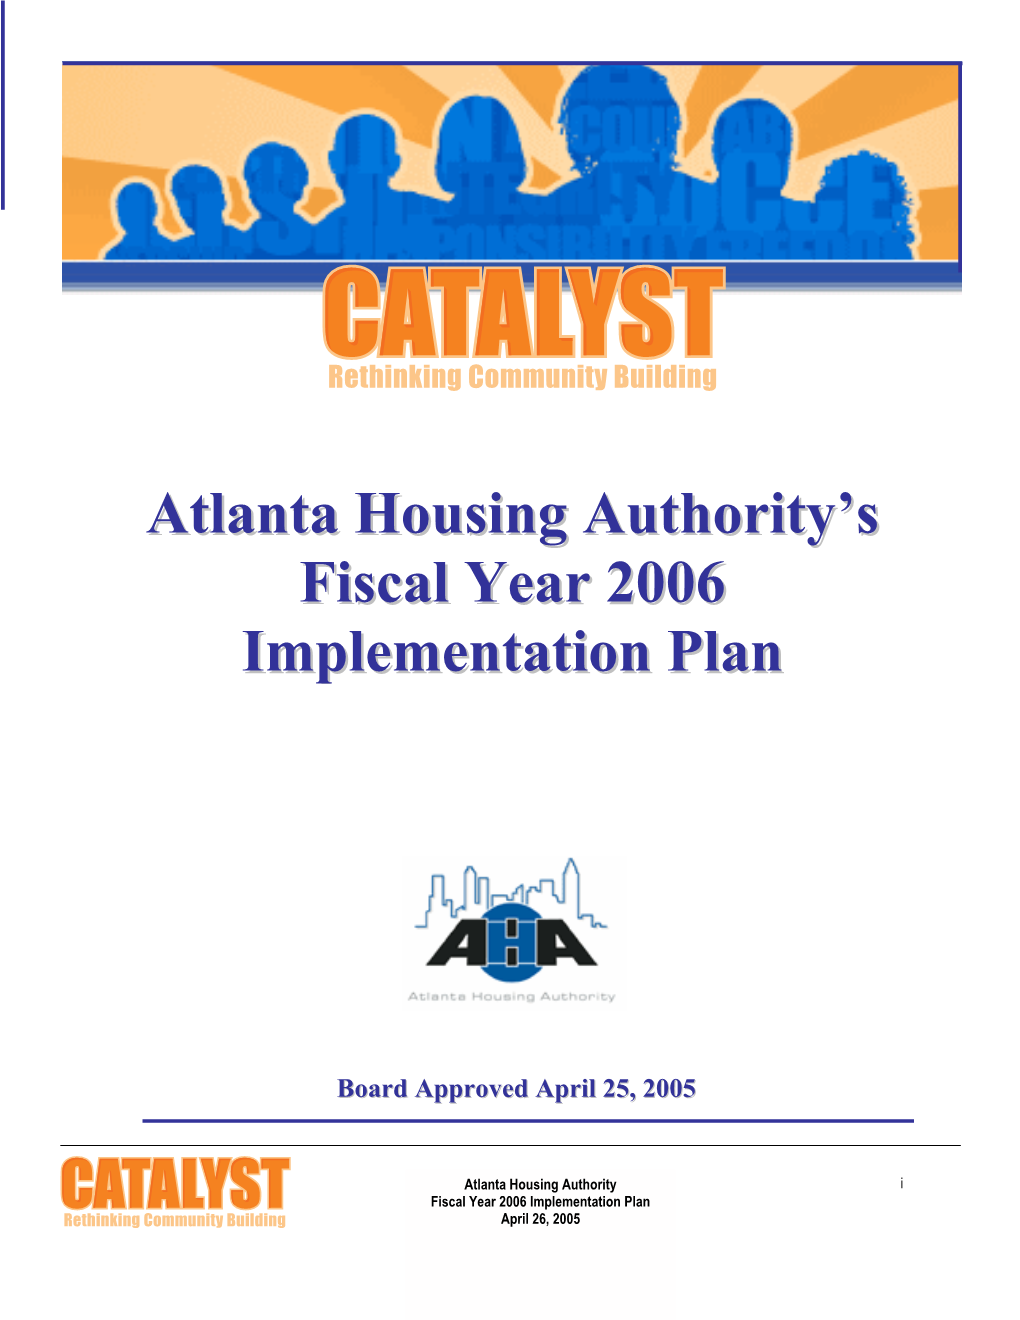 Atlanta Housing Authority's Fiscal Year 2006 Implementationn Plan